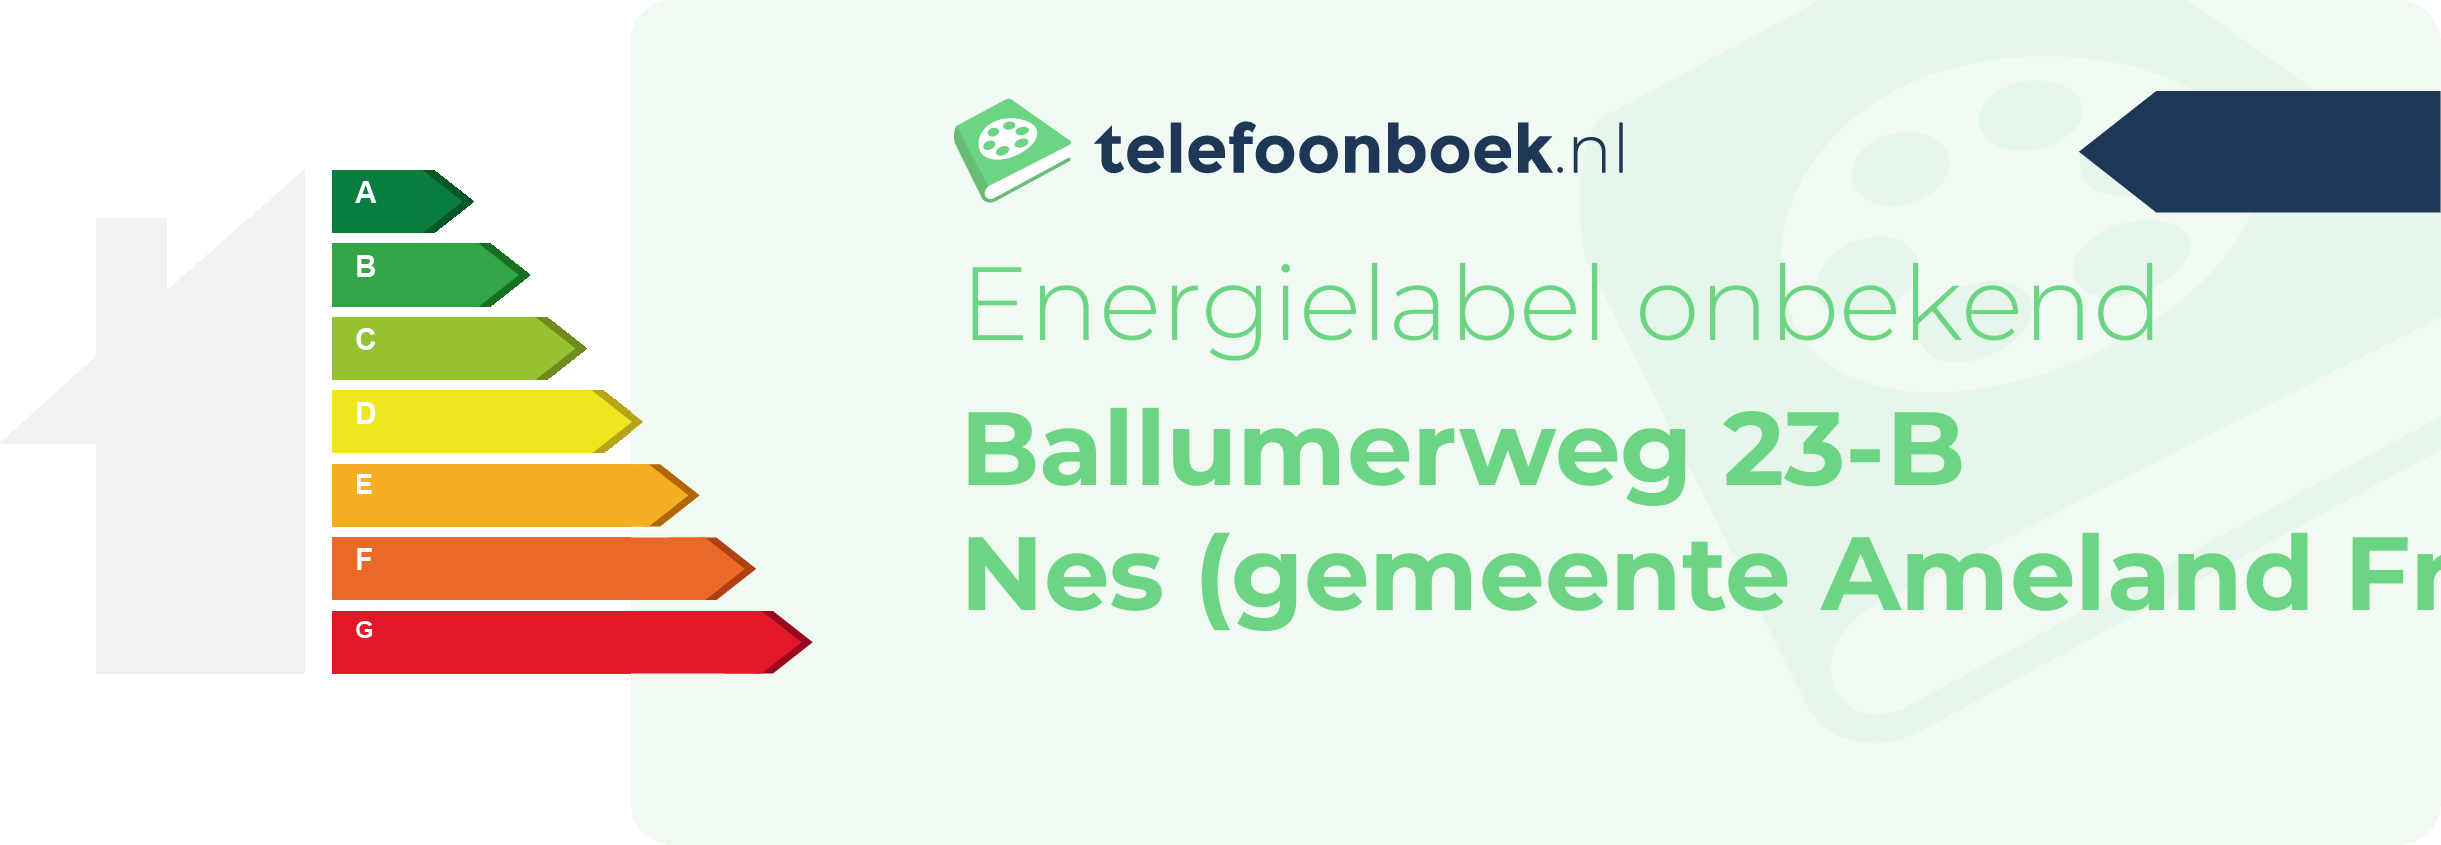 Energielabel Ballumerweg 23-B Nes (gemeente Ameland Friesland)